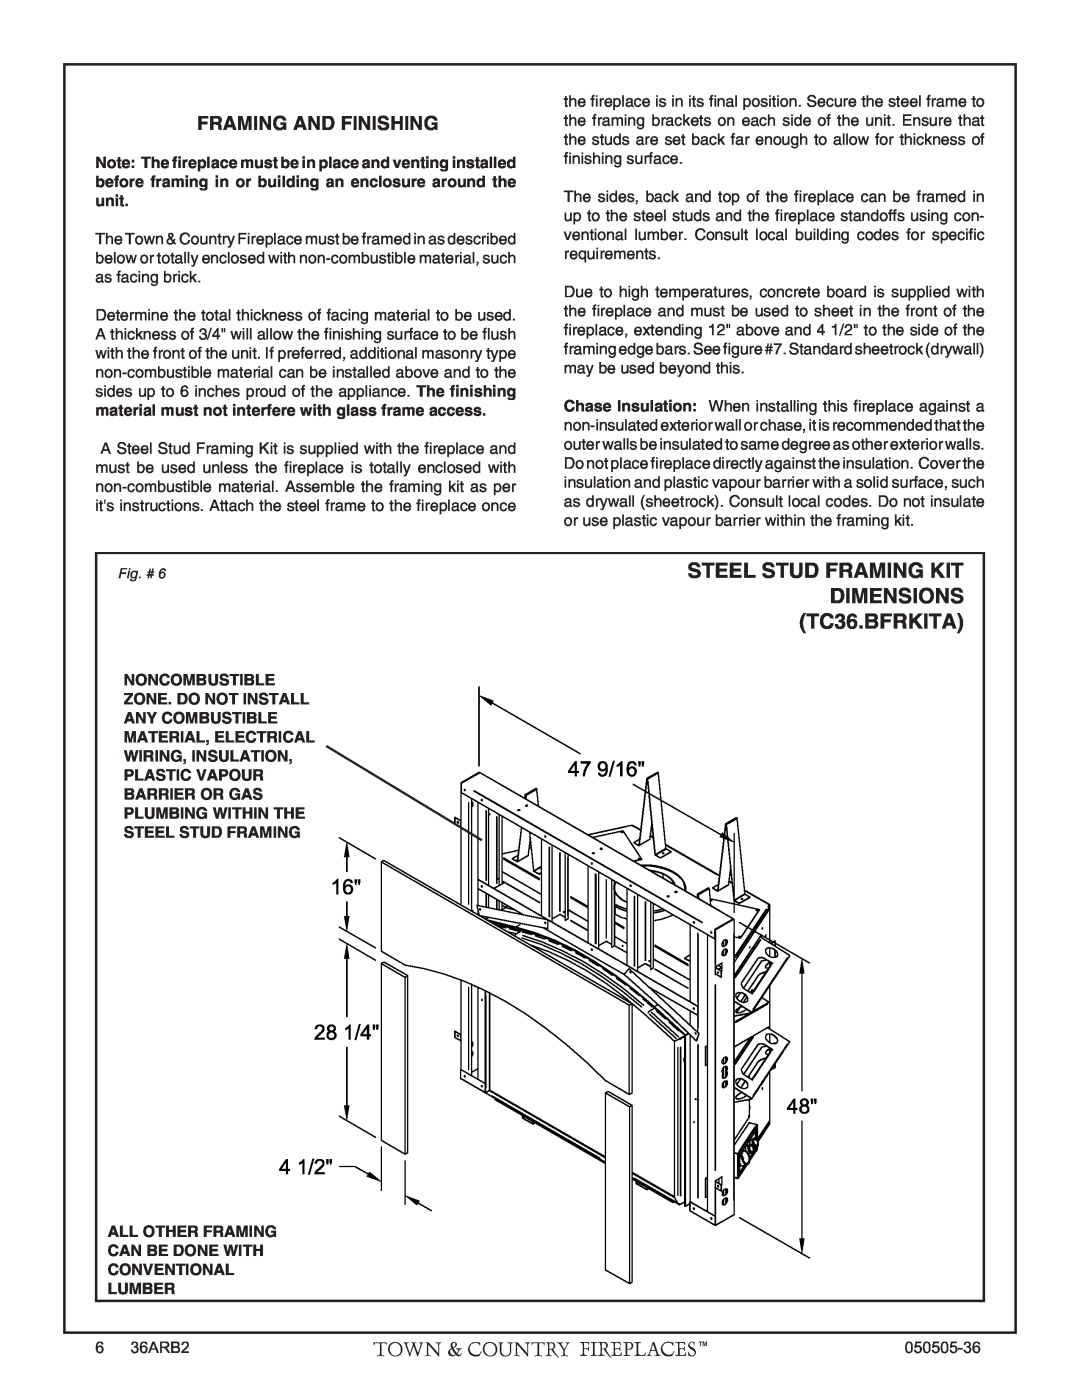 PGS TC36 AR manual Steel Stud Framing Kit, Dimensions, TC36.BFRKITA, Framing And Finishing 